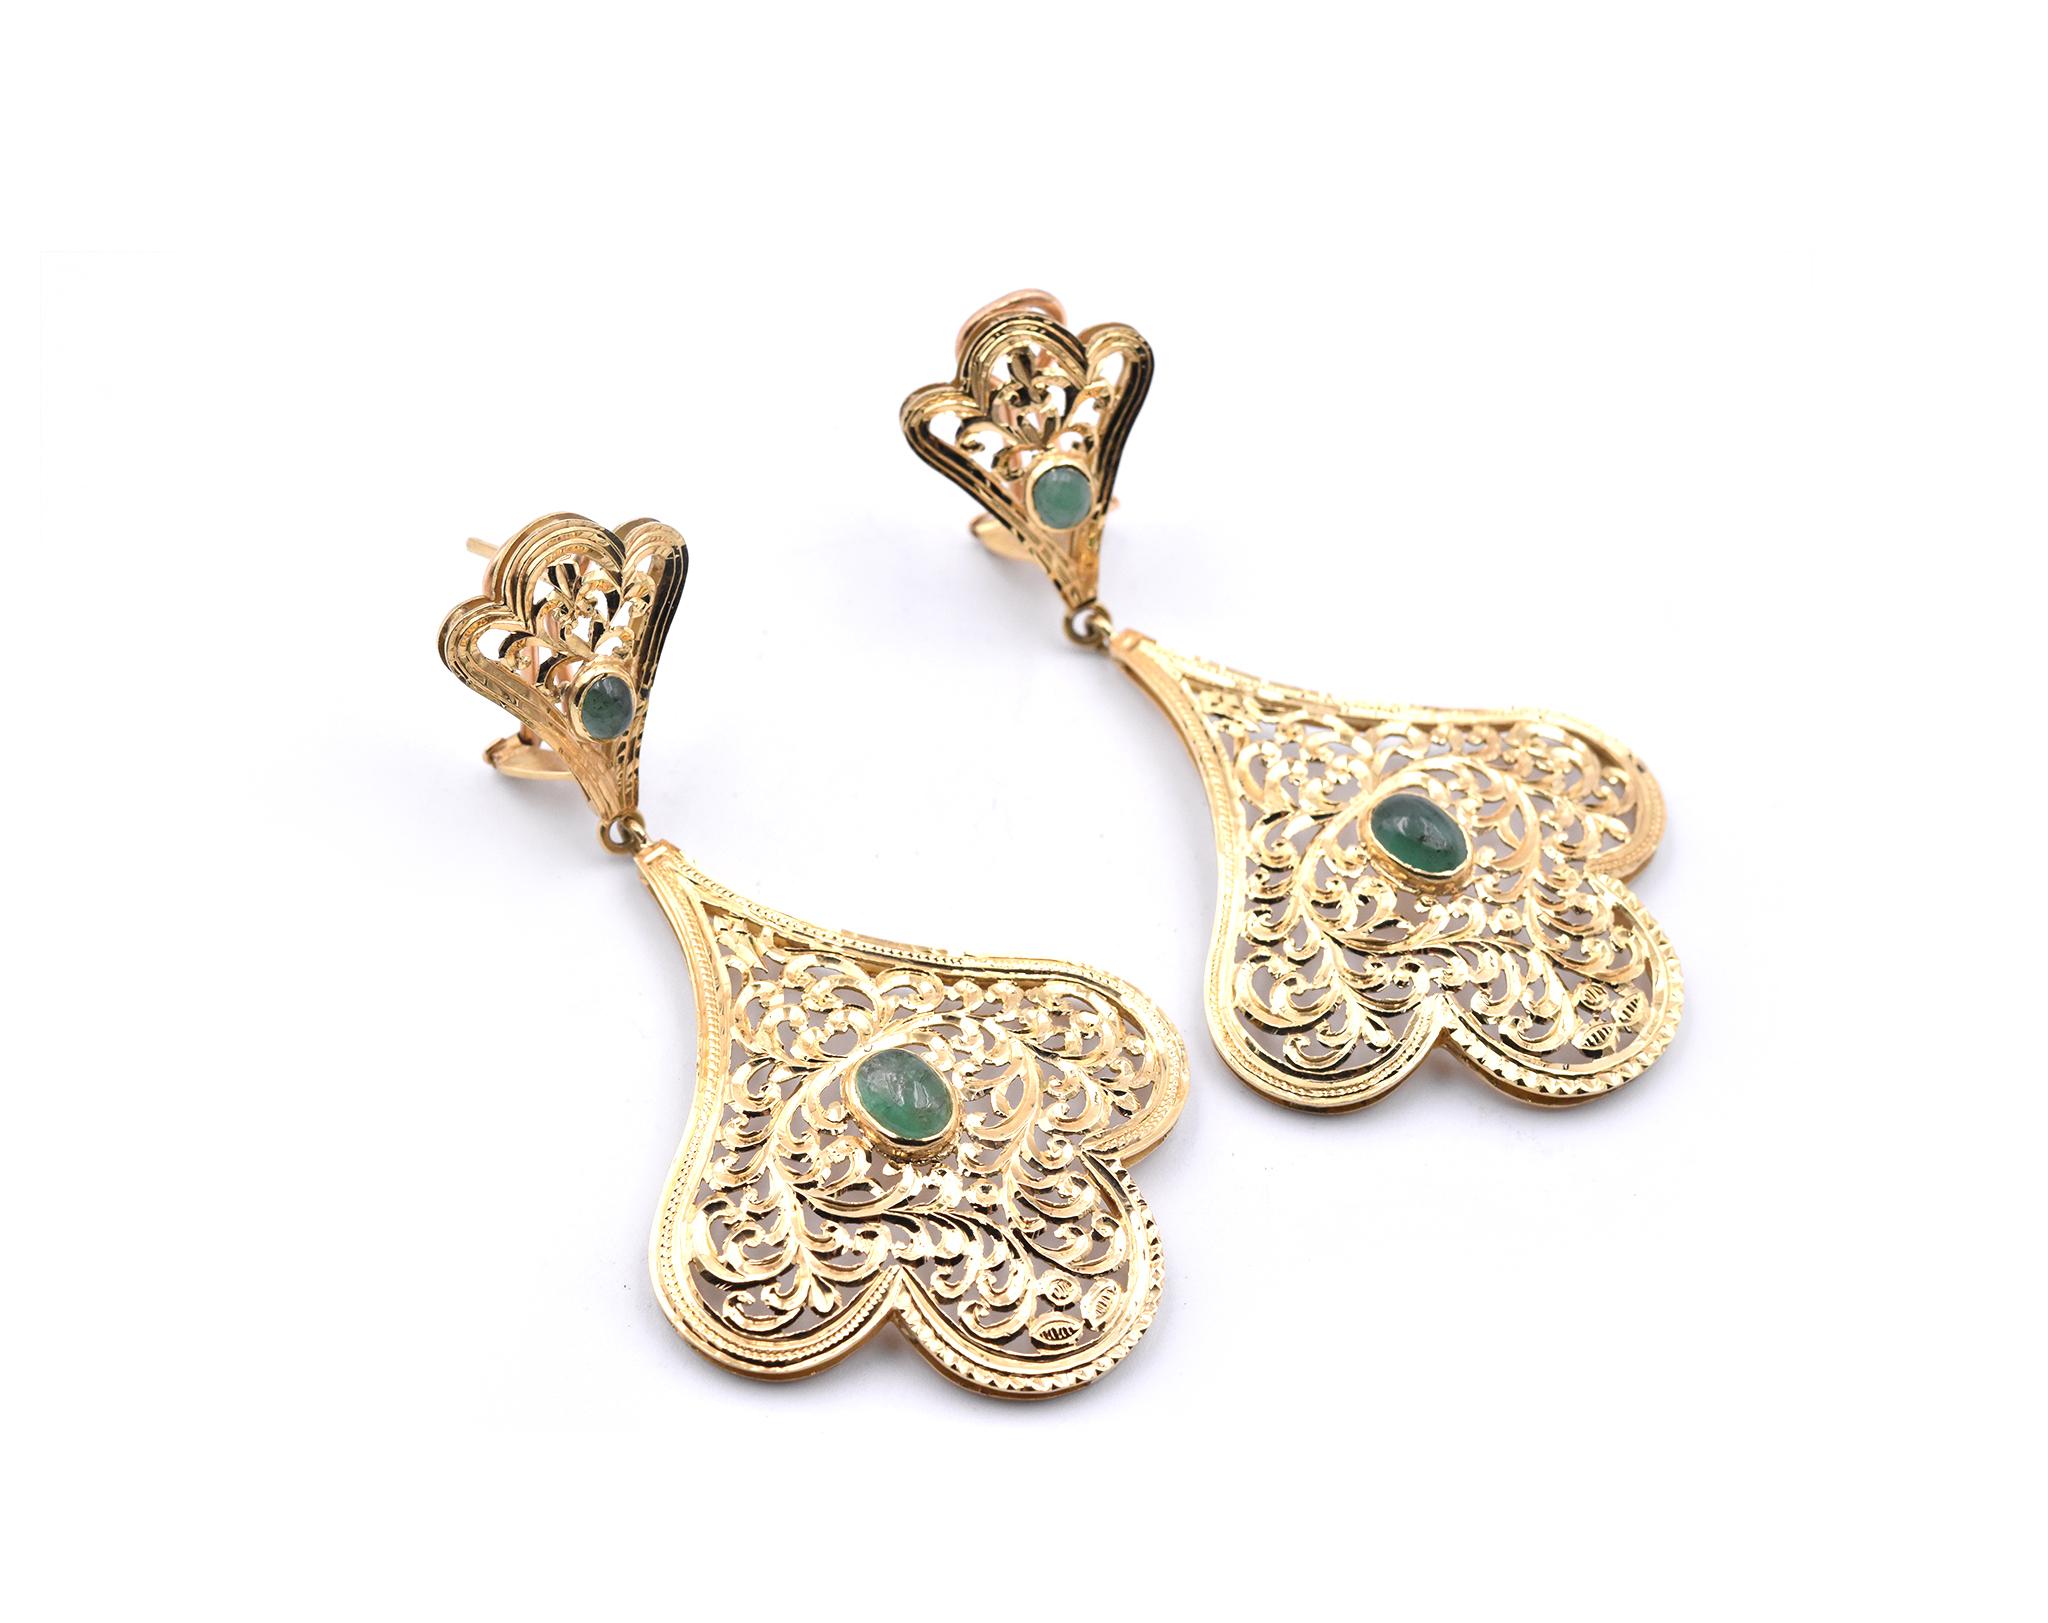 Designer: custom design
Material: 18k yellow gold
Gemstone: 4 cabochon cut jades 
Dimensions: earrings measure 77.70mm x 41.50mm
Fastenings: post with omega backs
Weight: 24.6 grams
